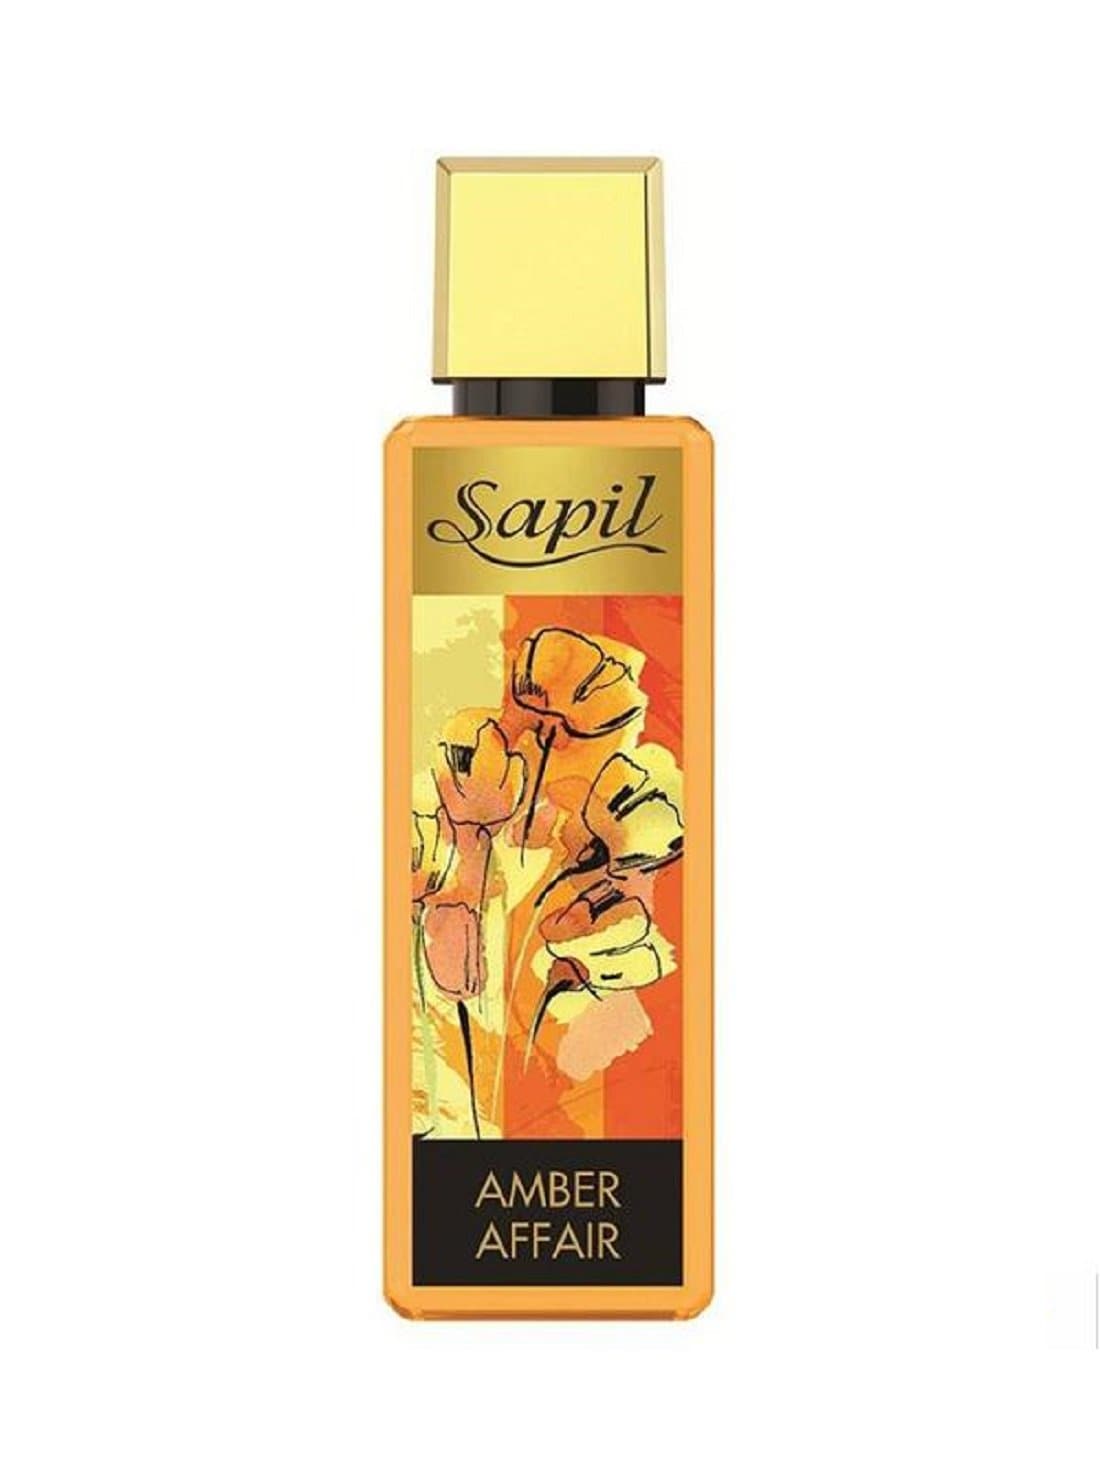 Amber Affair for Women Body Mist - 250 ML (8.4 oz) by Sapil - Intense oud